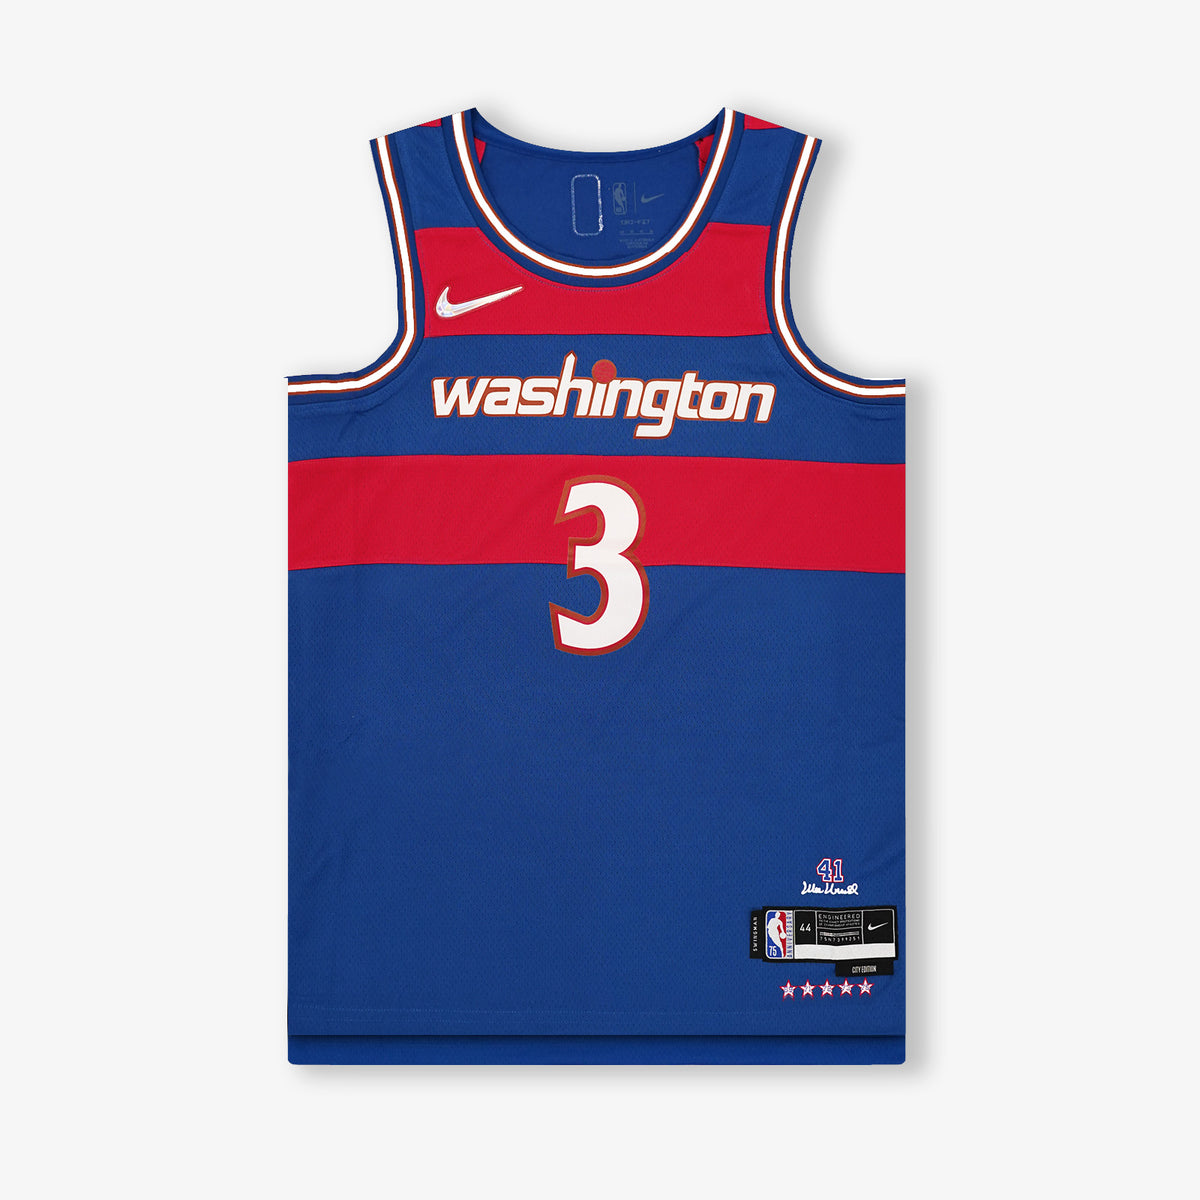 Washington Wizards Jerseys & Teamwear, NBA Merch